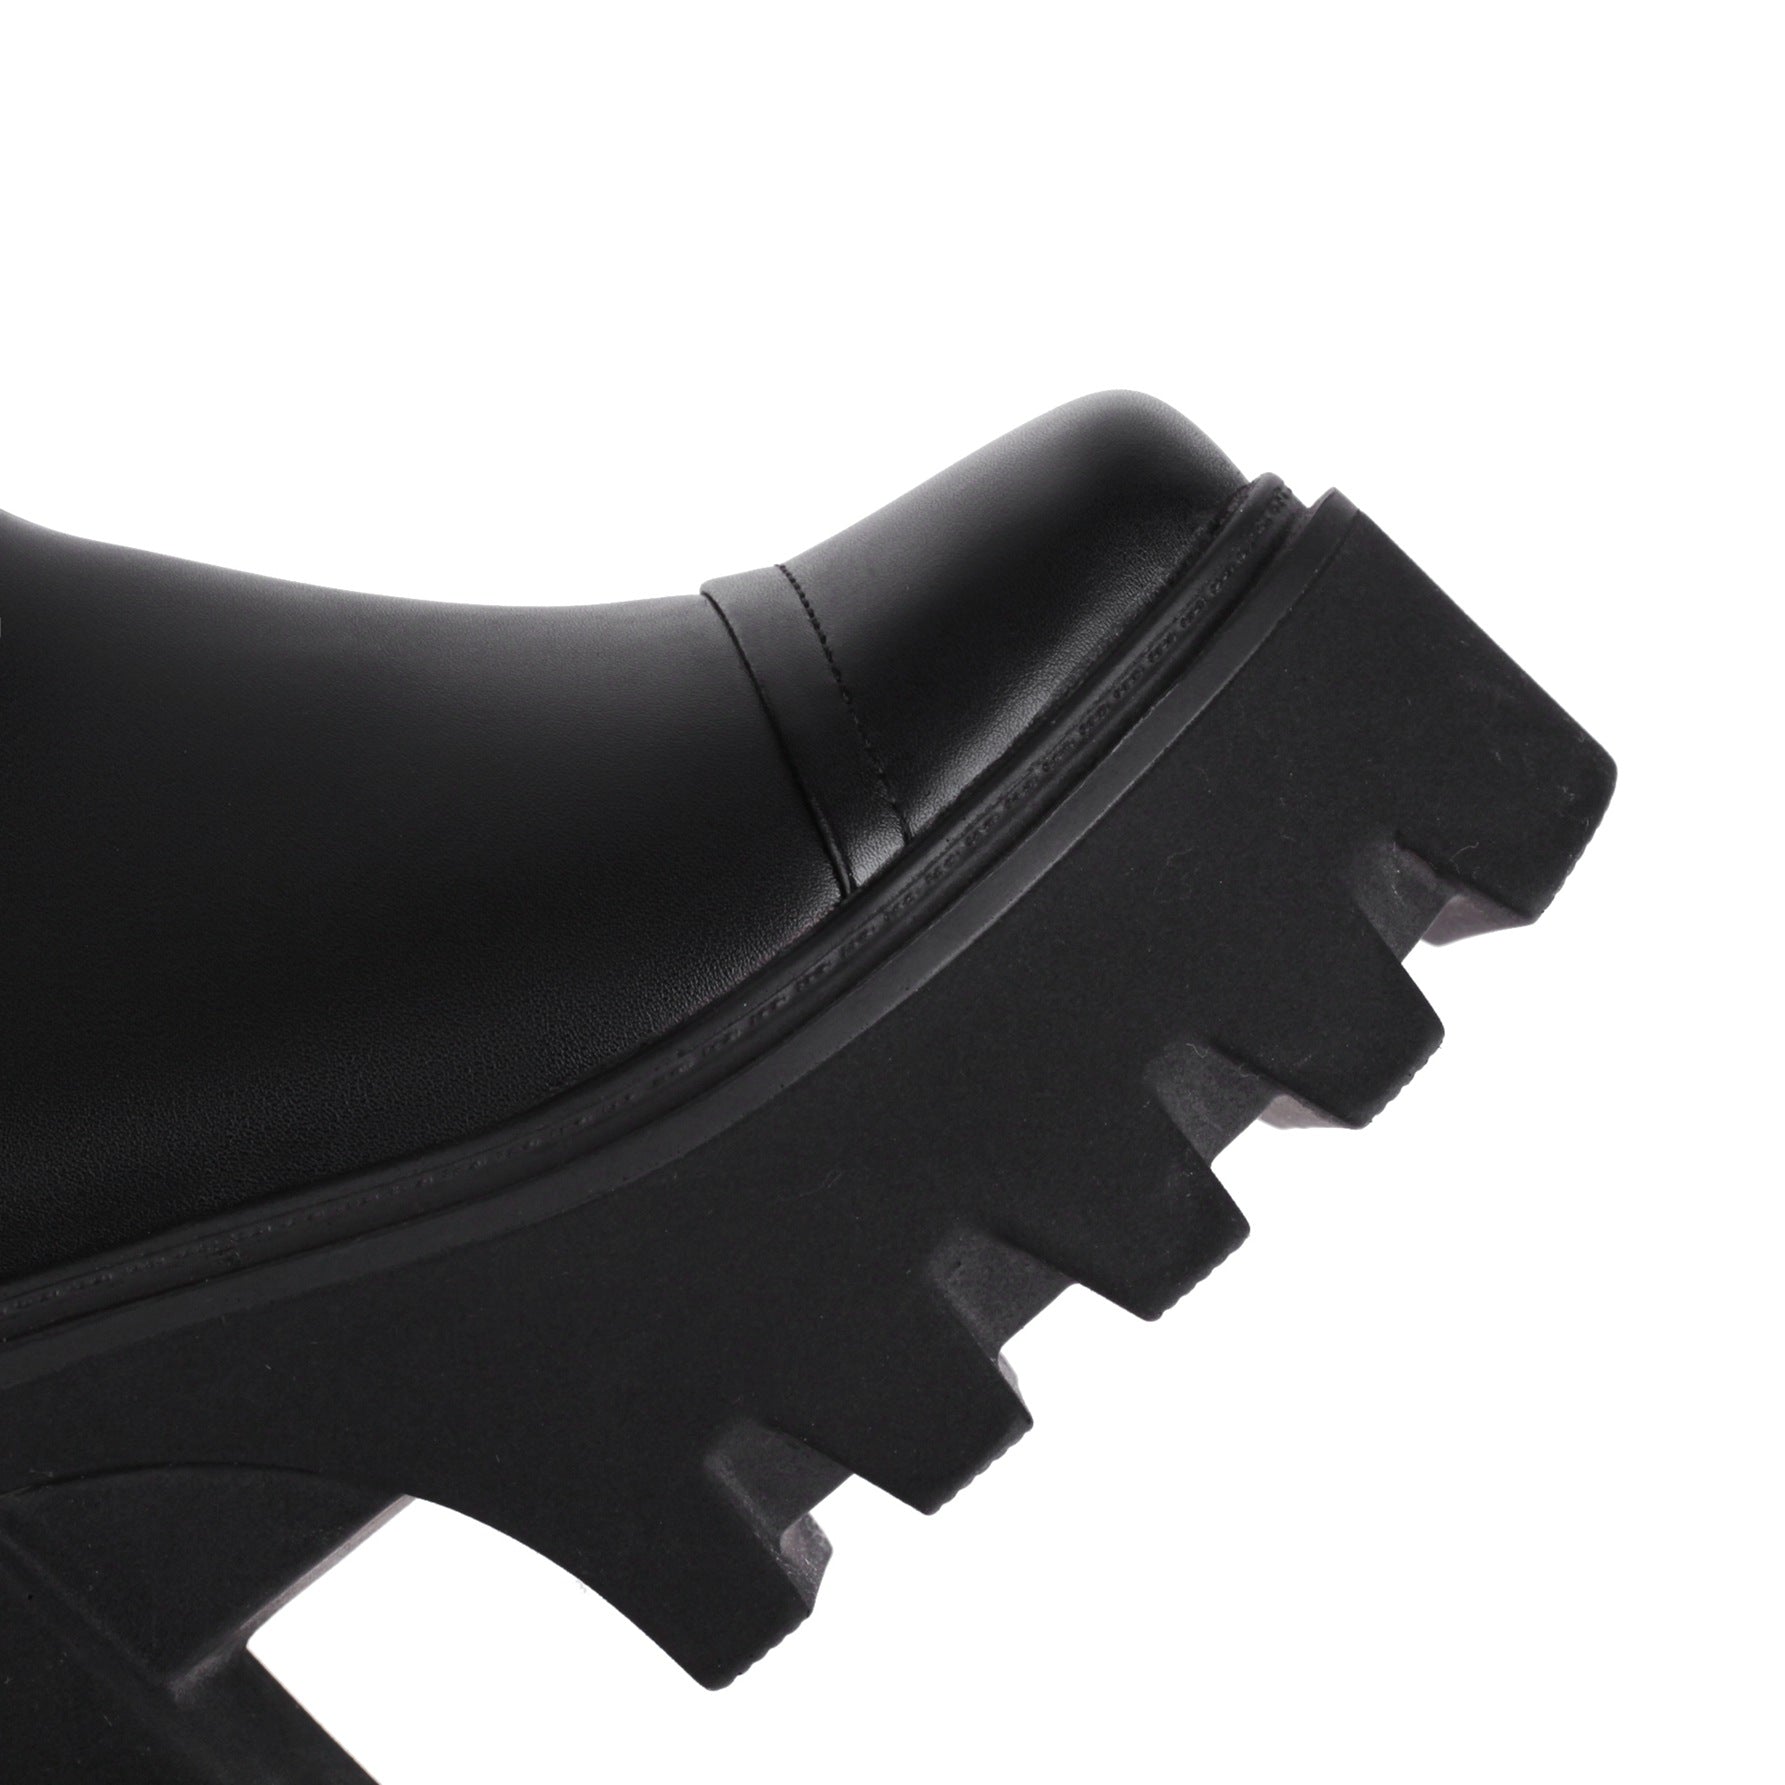 Bigsizeheels Diablo retro one word buckle fashion boots - Black freeshipping - bigsizeheel®-size5-size15 -All Plus Sizes Available!